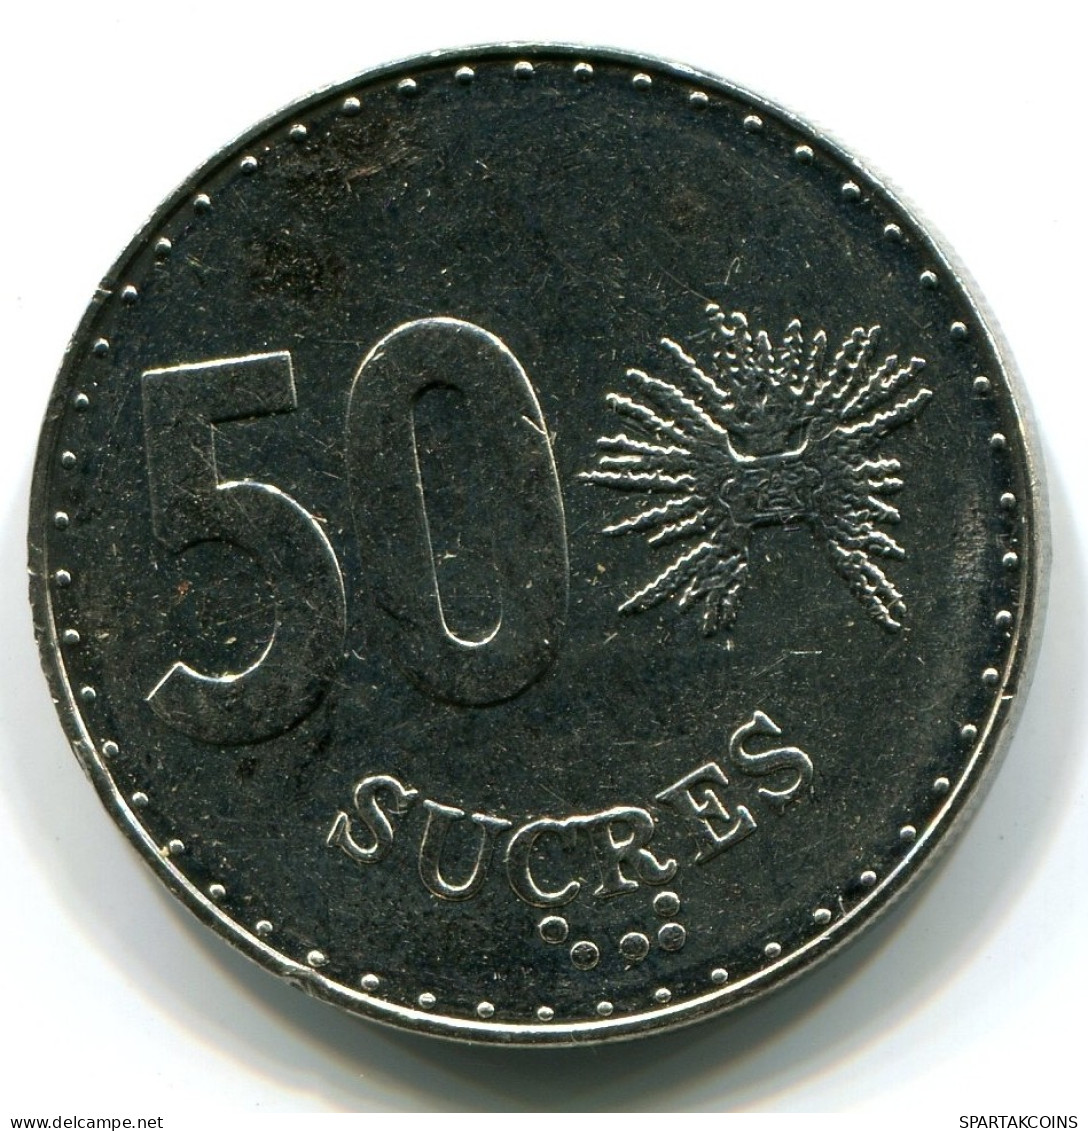 50 SUCRE 1991 ECUADOR UNC Coin #W11019.U.A - Ecuador